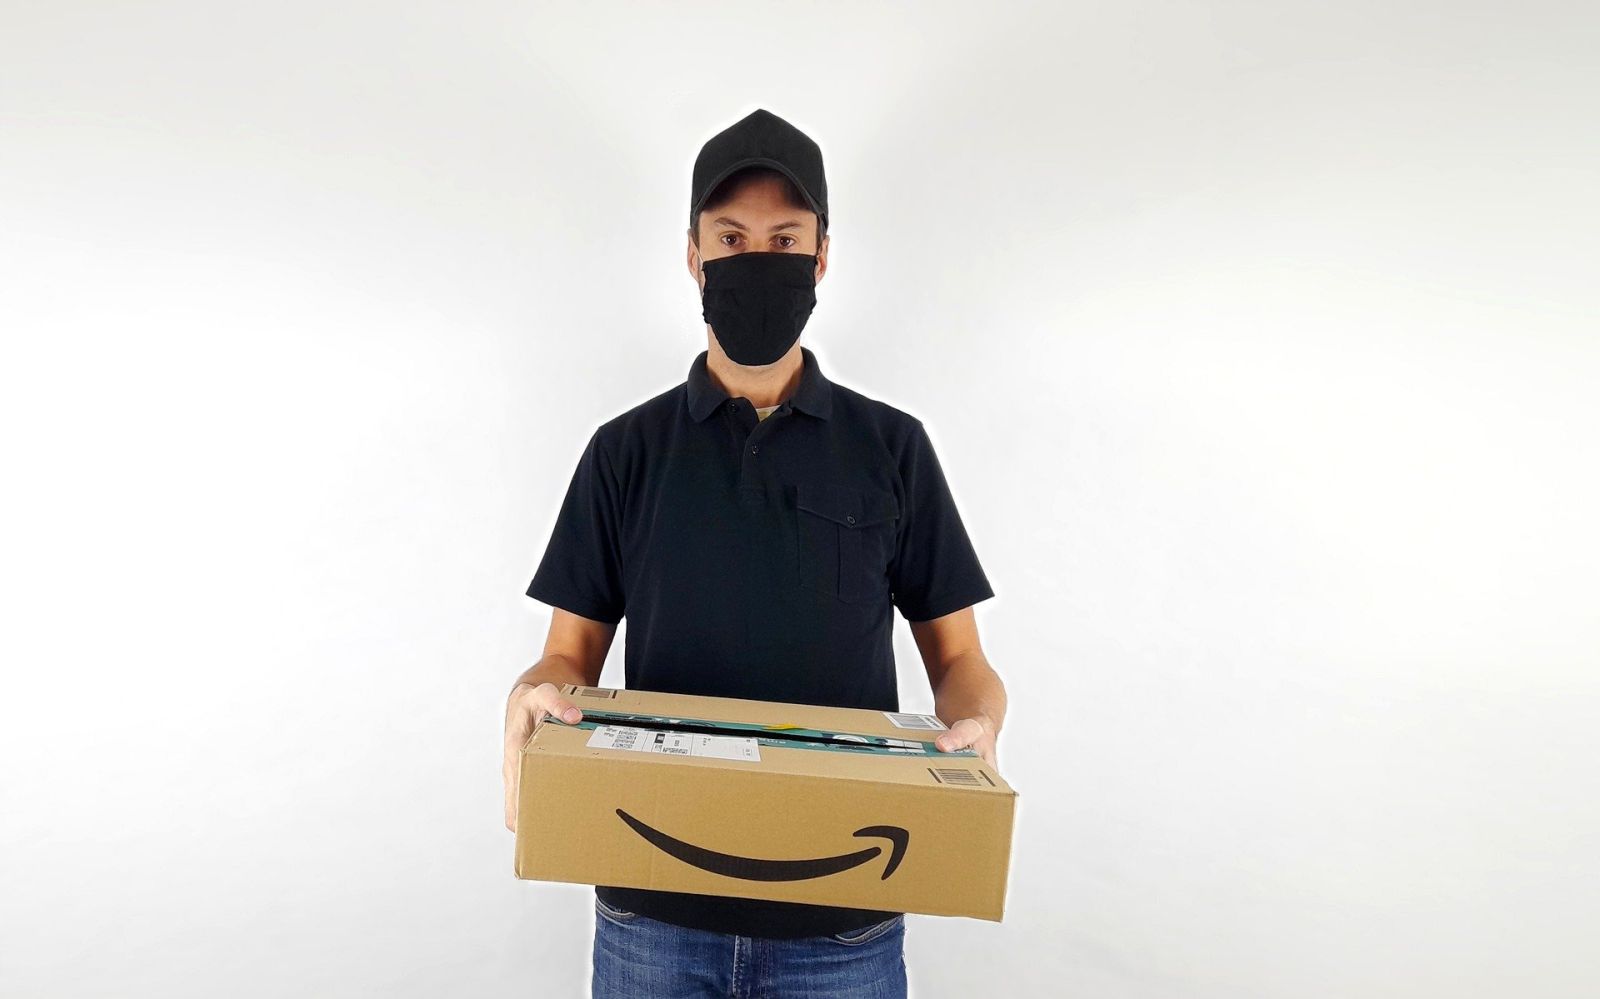 Tech (Ecommerce, Social Media, etc.) - Amazon Box Delivery